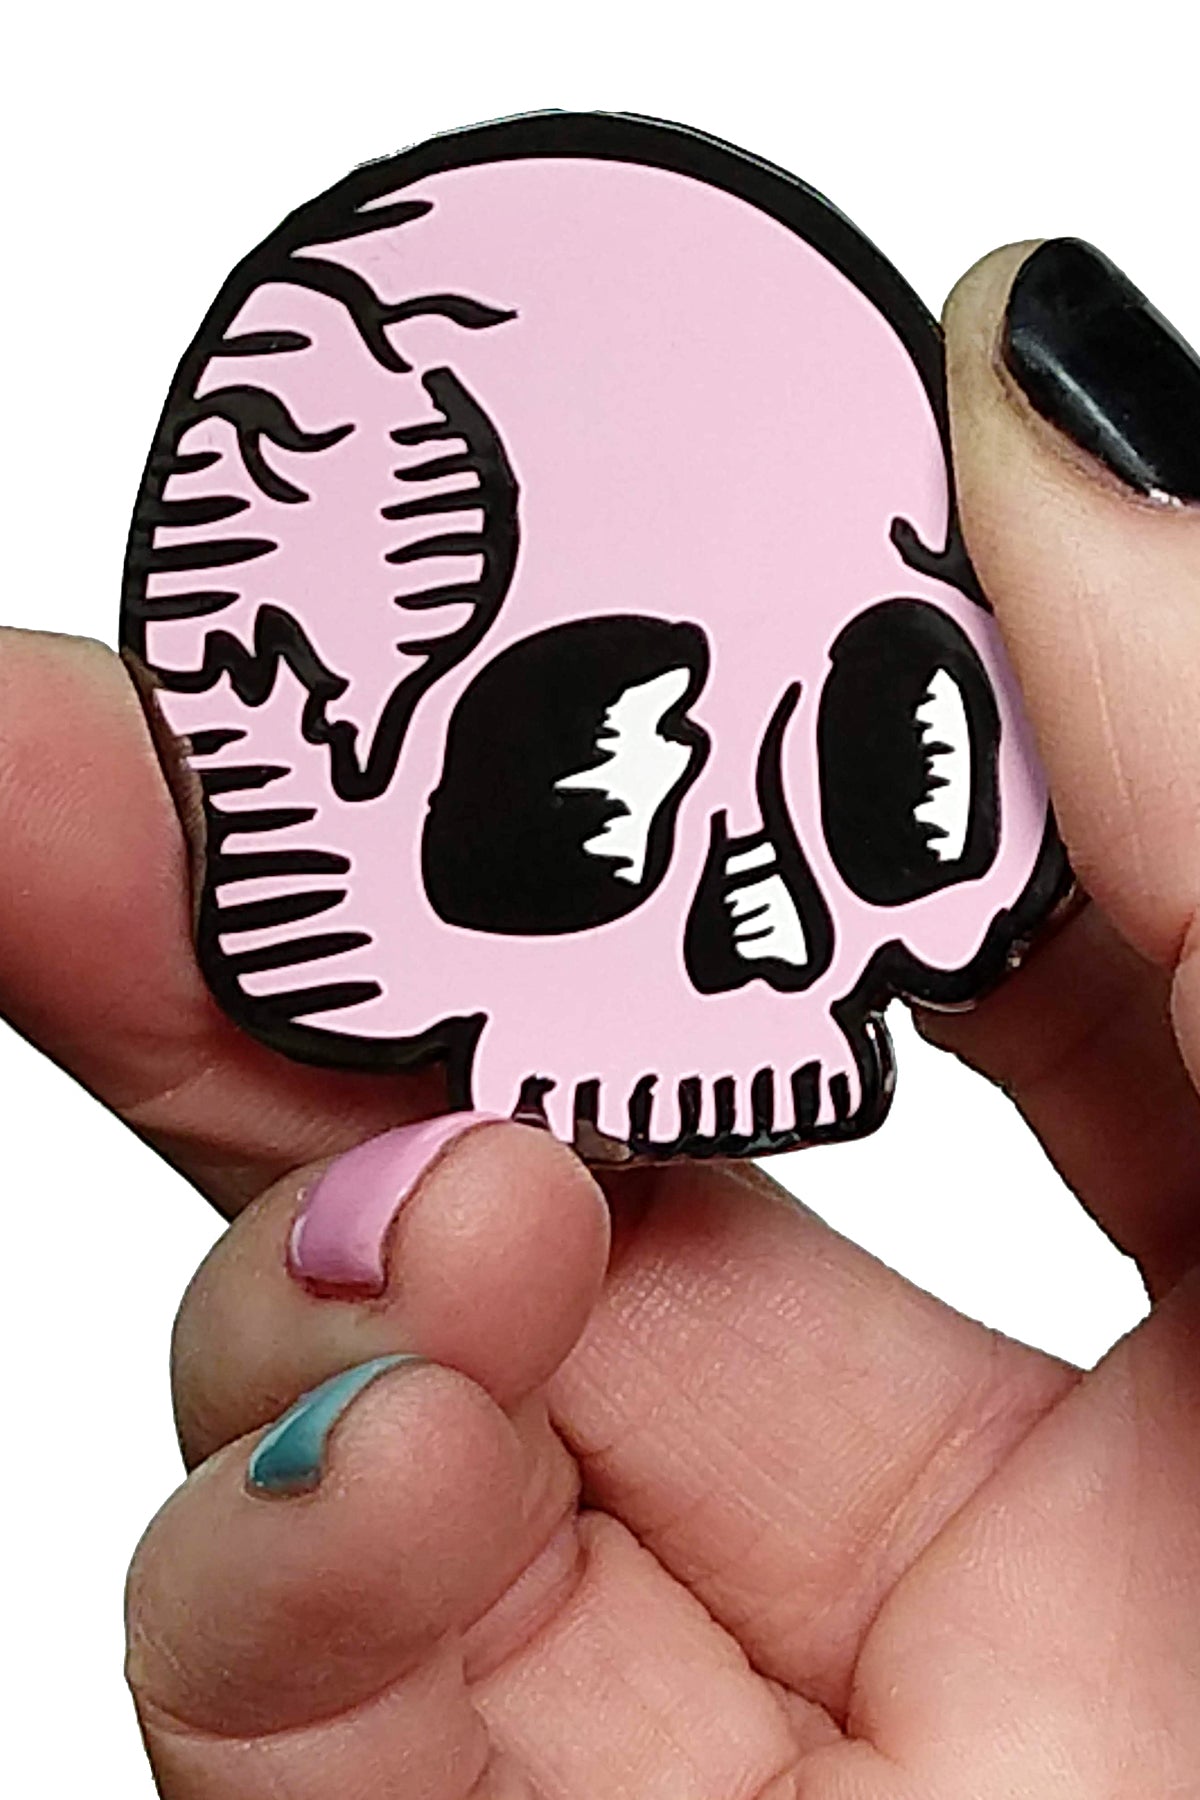 Skull Enamel Pin - shopjessicalouise.com